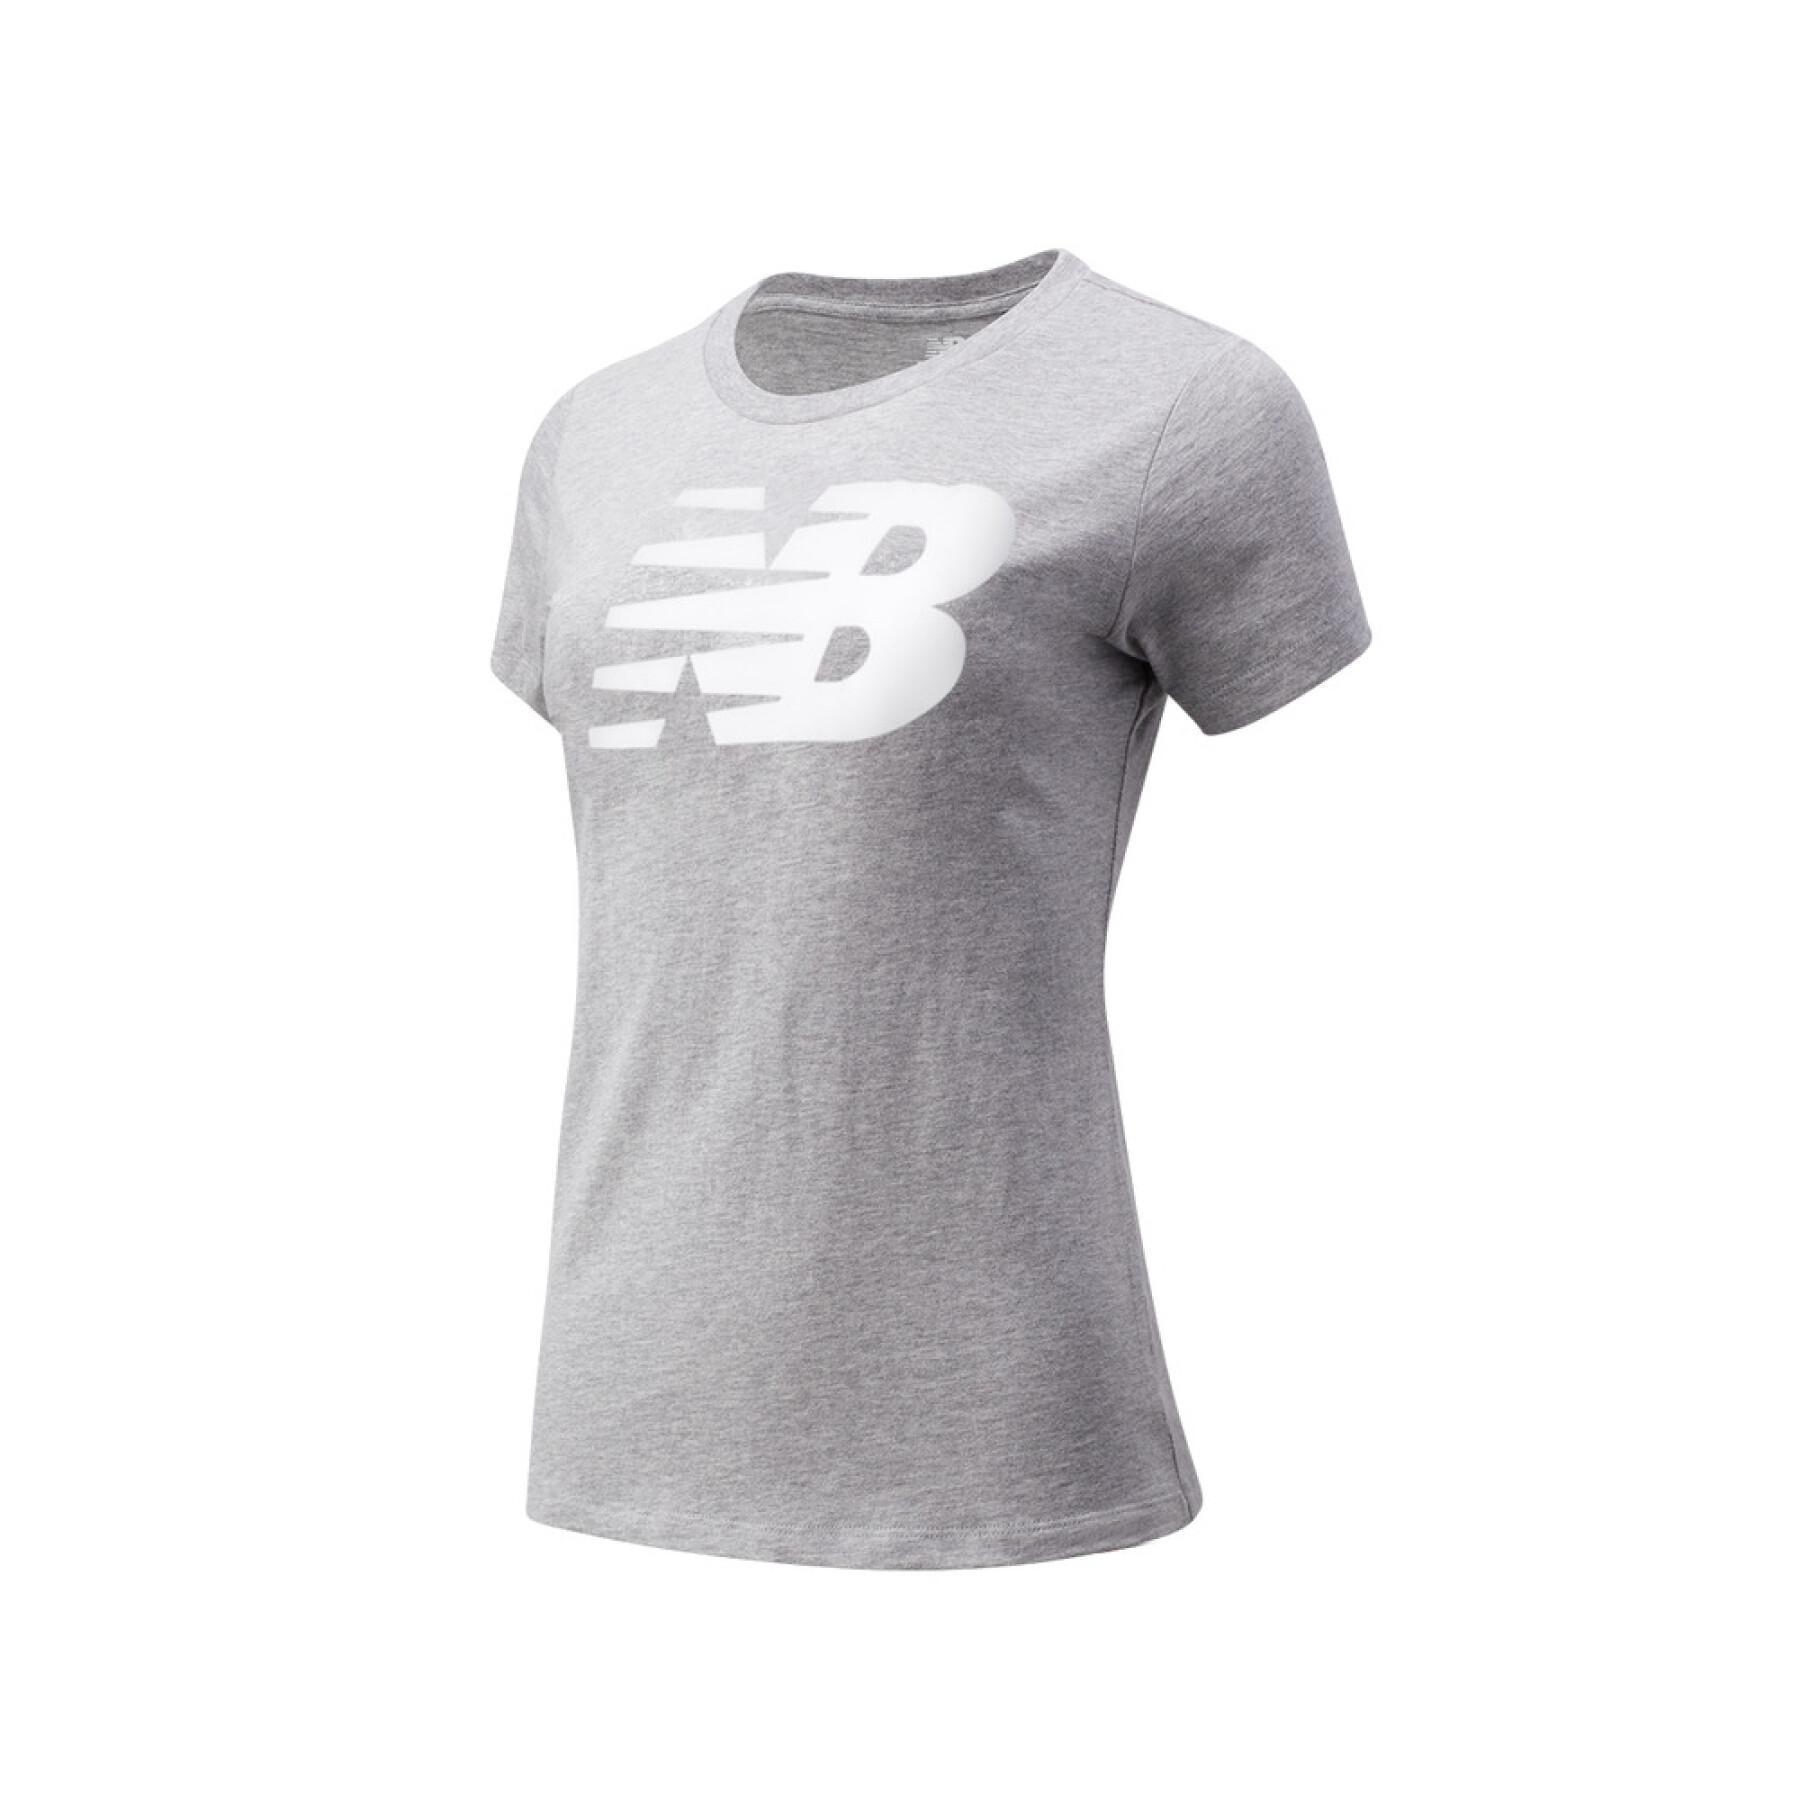 Women's T-shirt New Balance Graphic classic Flying